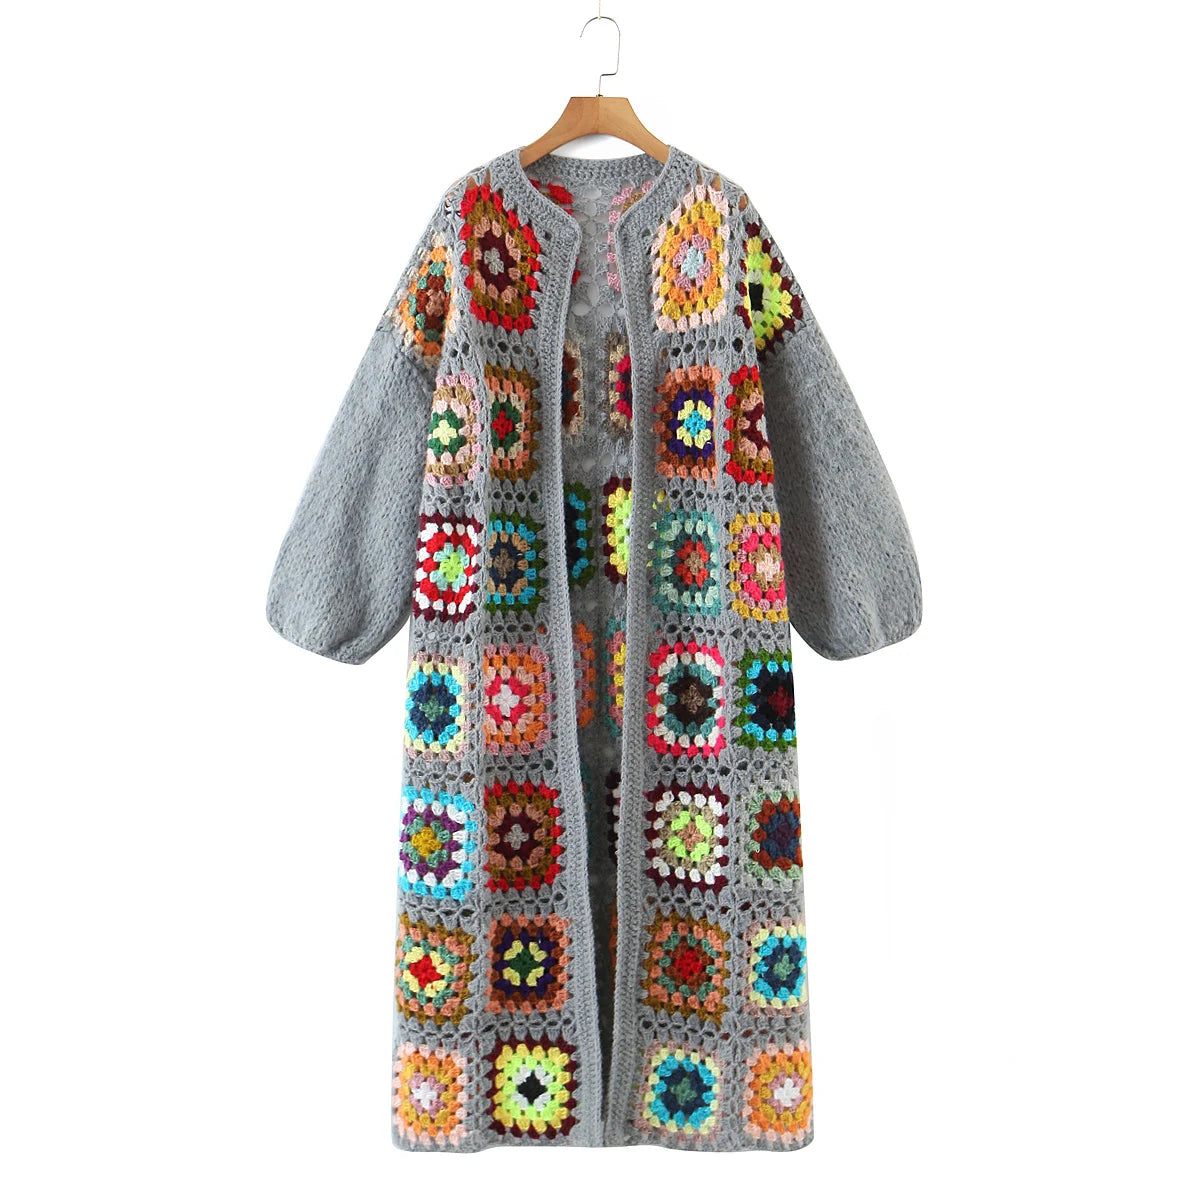 Bohemia Vintage Colored Plaid Flower Granny Square Hand Crochet Long Cardigan Coats & Jackets jehouze One Size Grey 